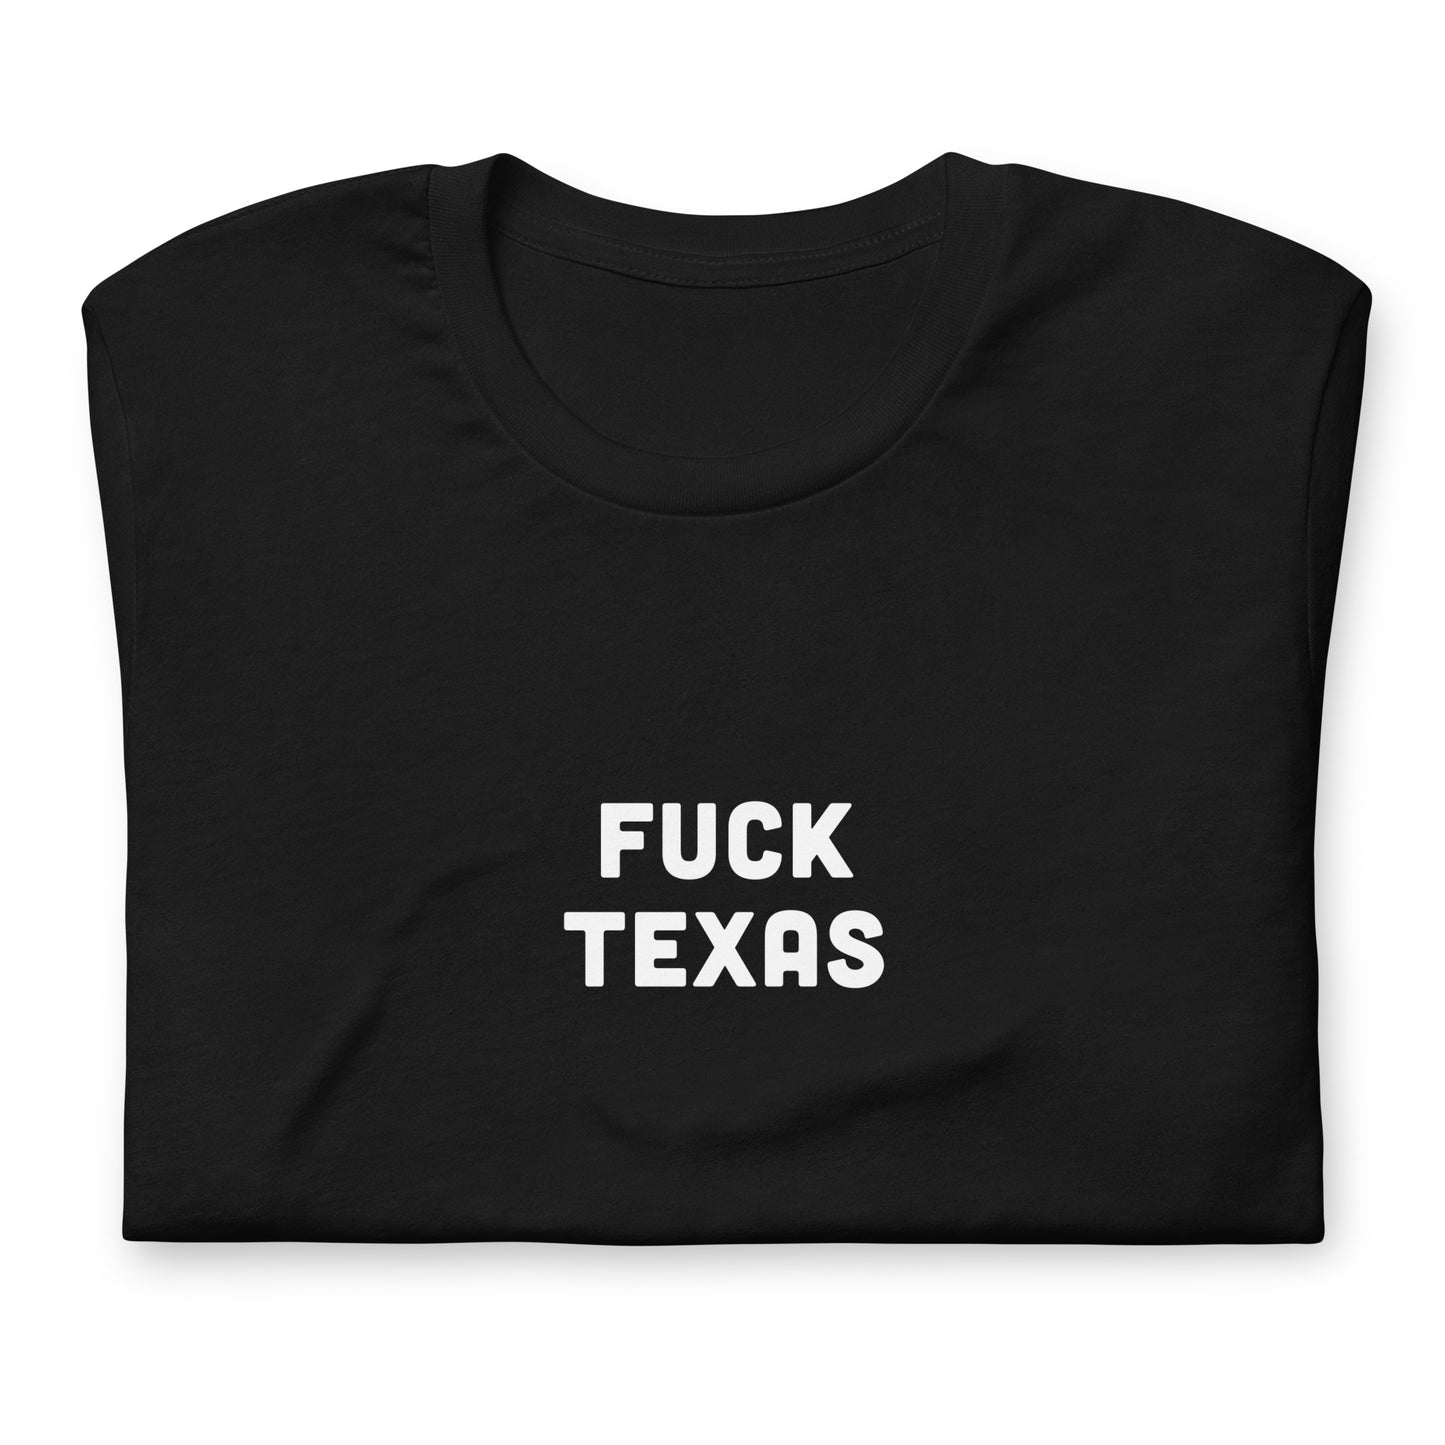 Fuck Texas T-Shirt Size 2XL Color Black